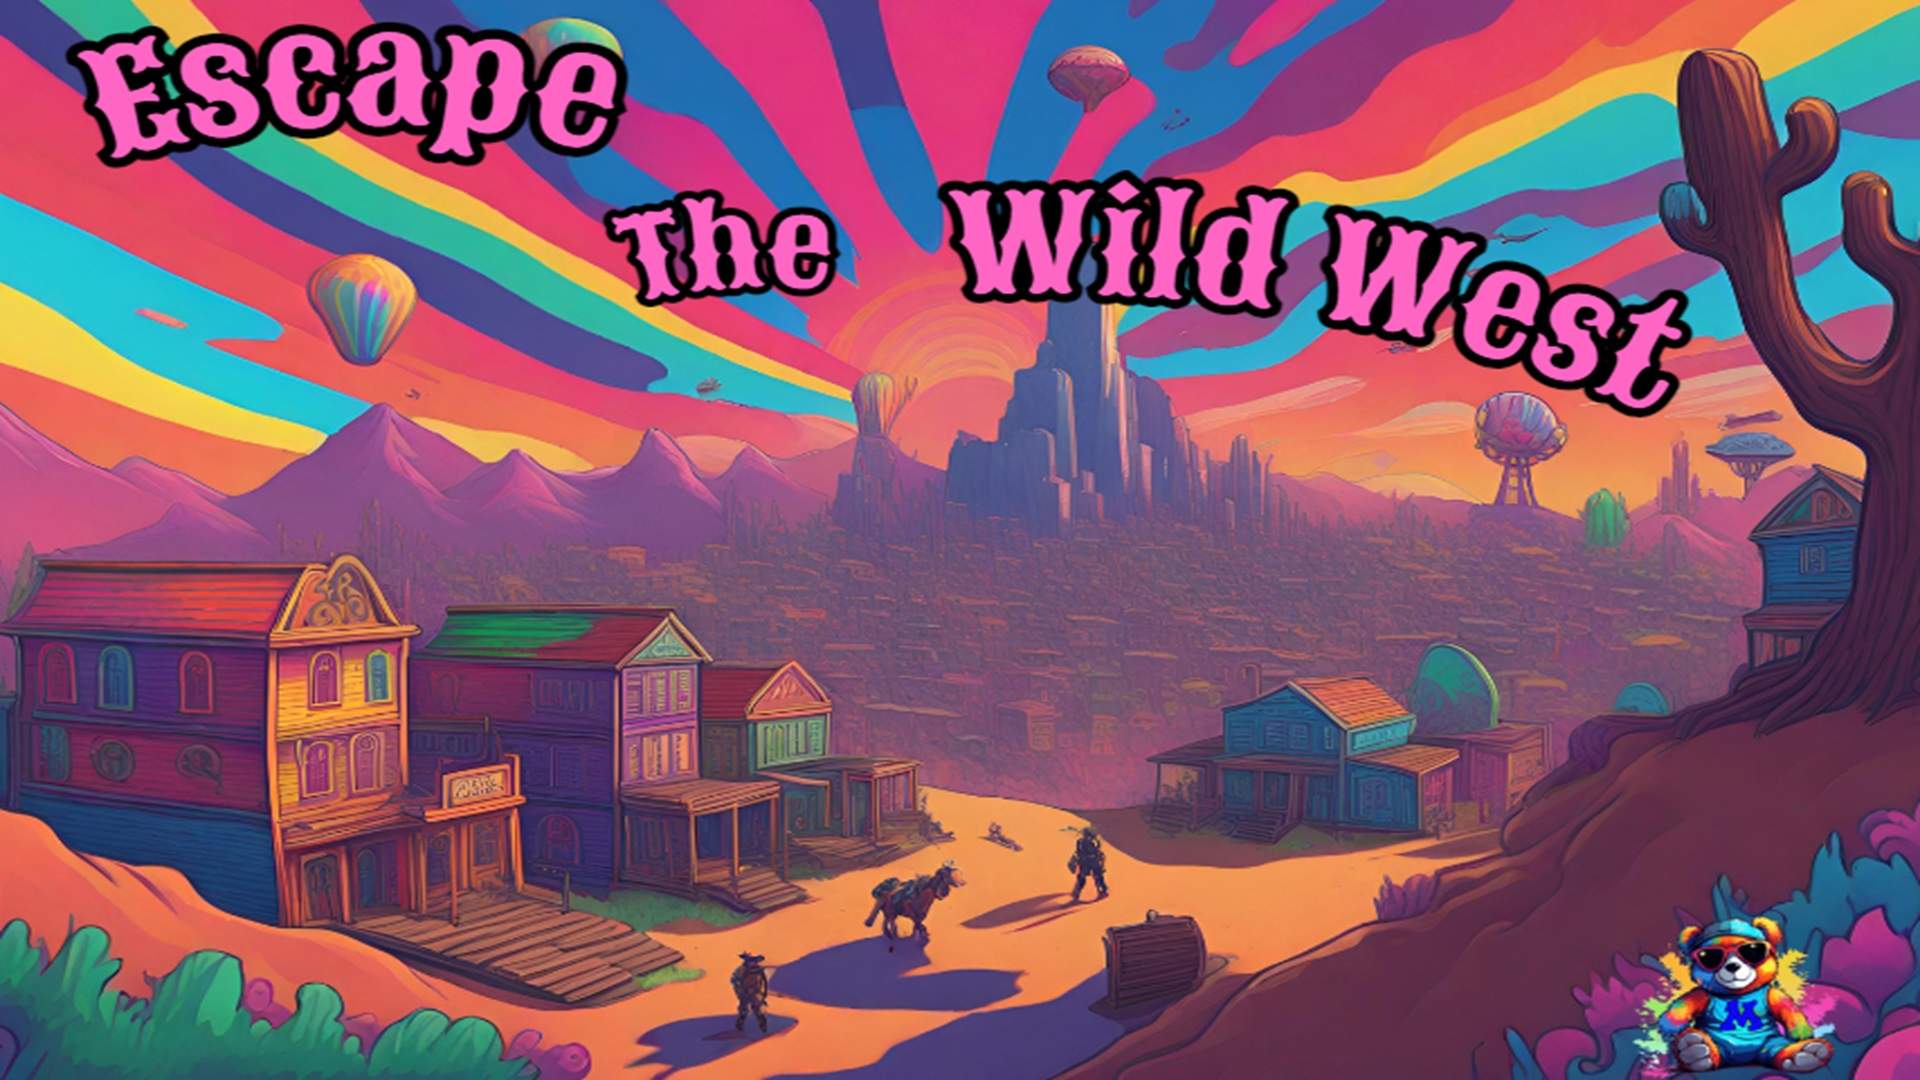 Escape The Wild West